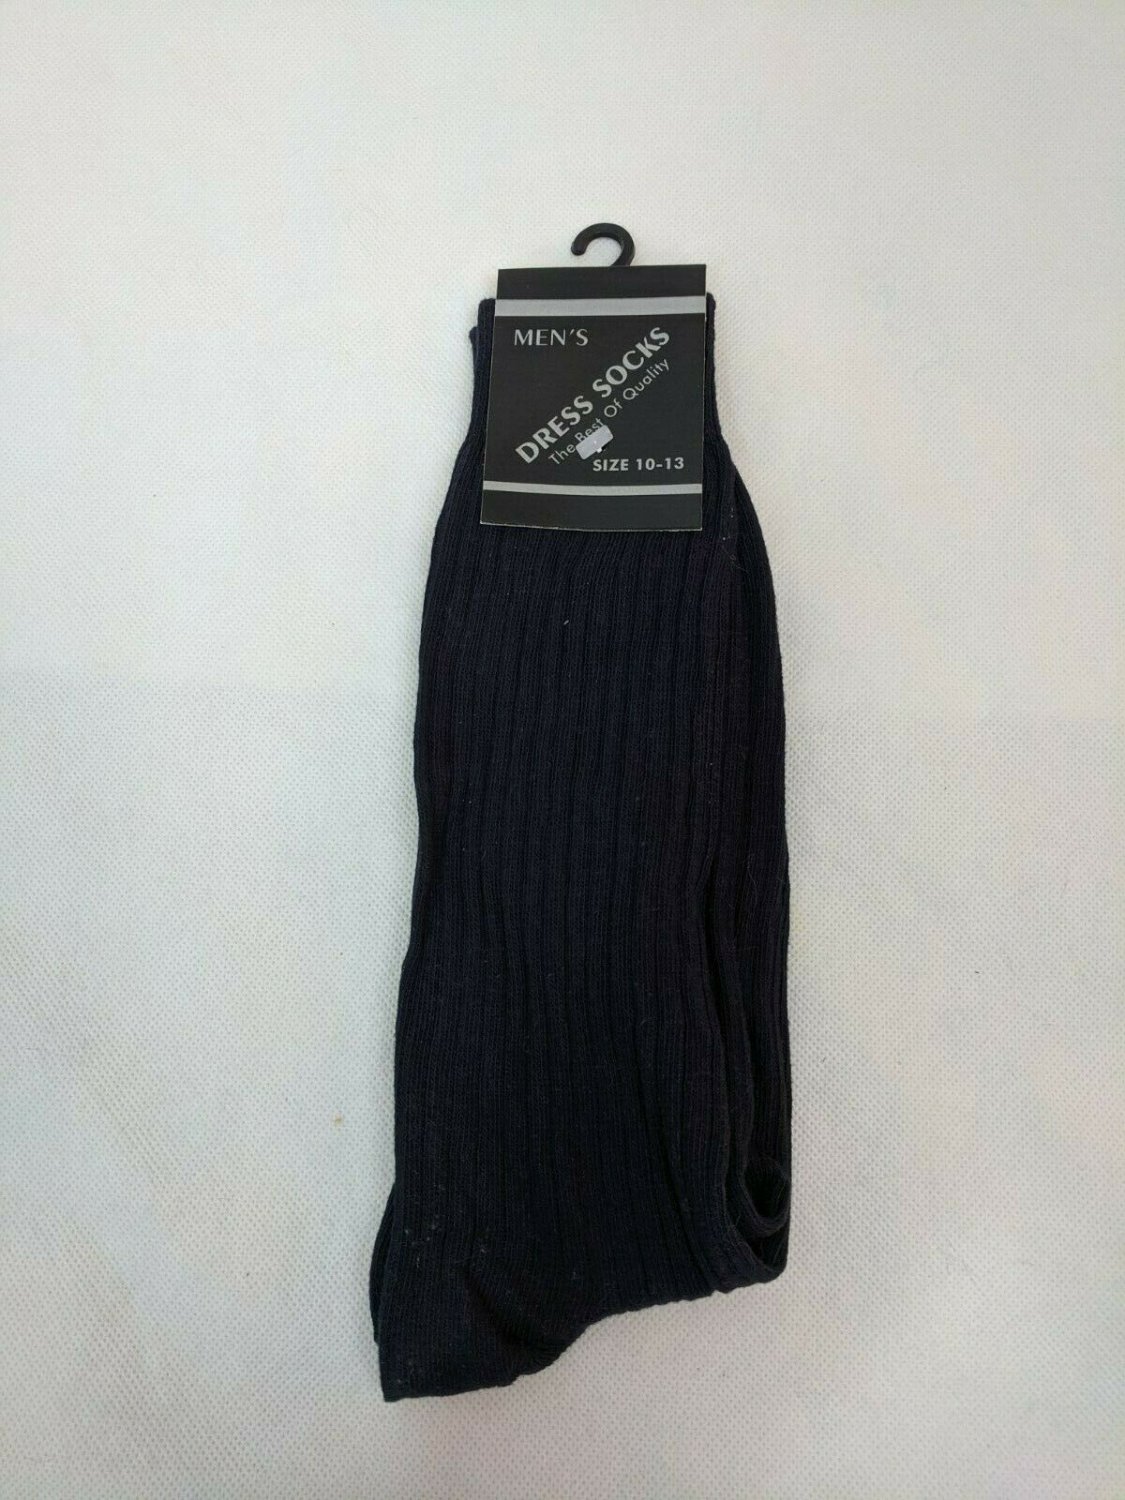 Men's Dress Socks Navy Blue Size 10-13 85-Cotton 15-Nylon 19.5